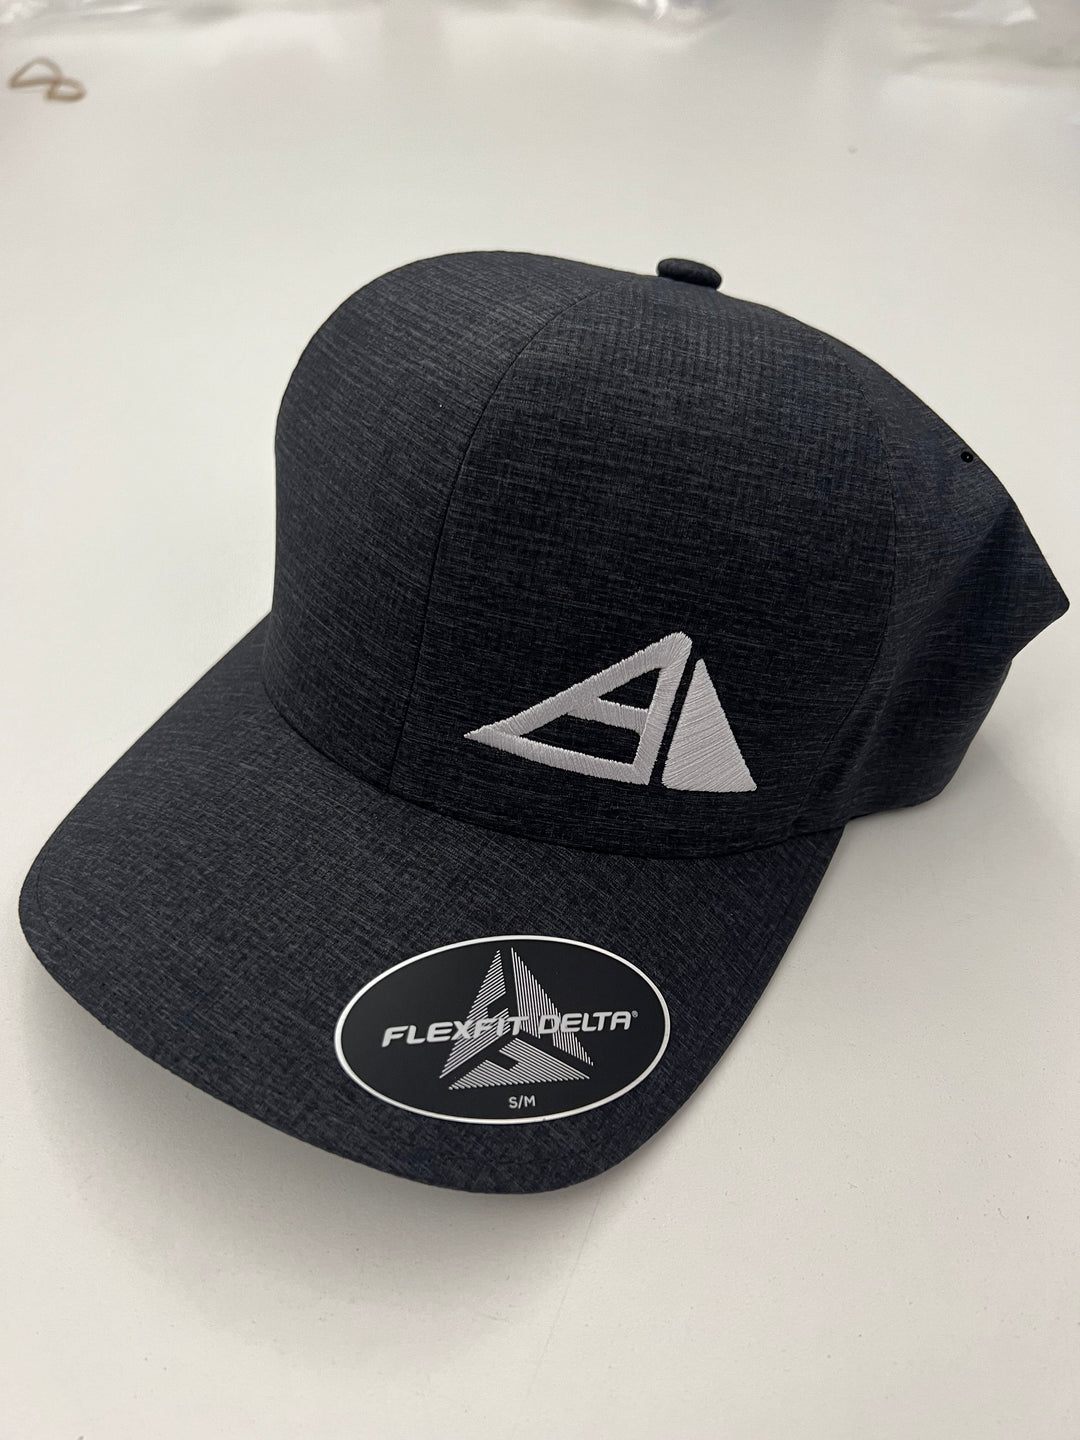 Axiom Flexfit Delta Carbon Hat Dark Grey